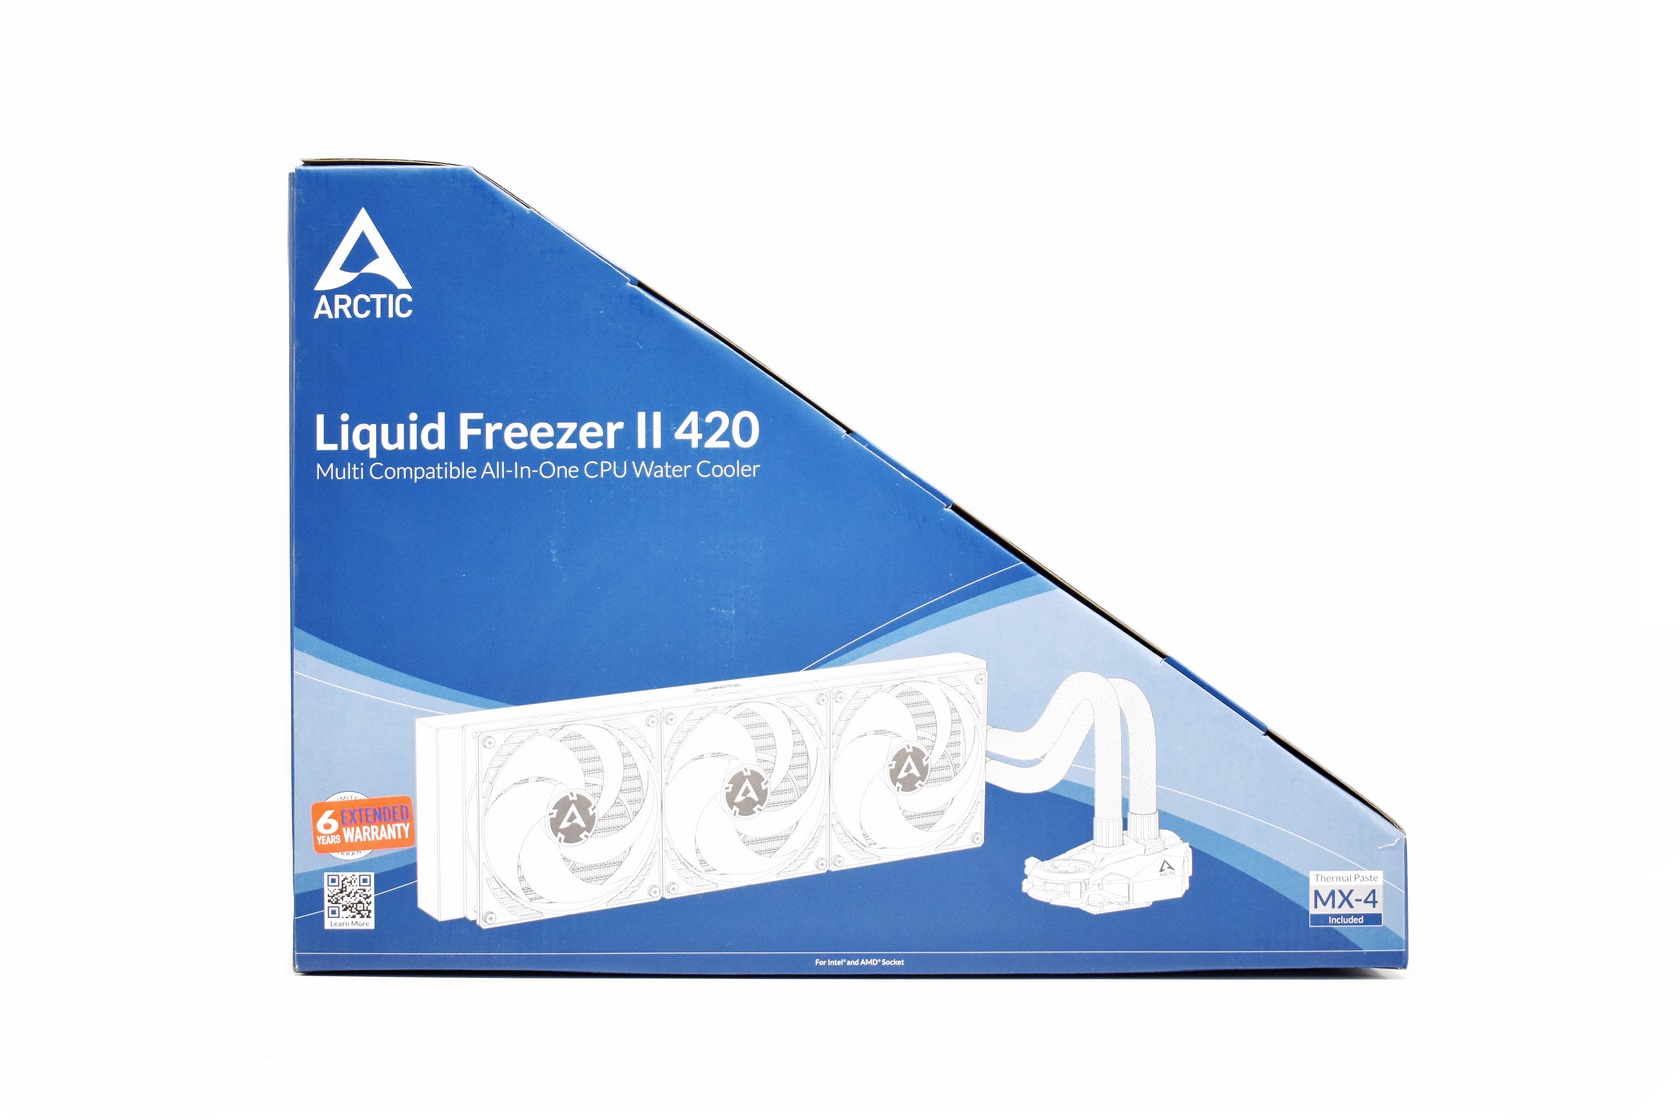 ARCTIC Liquid Freezer II 420 AIO CPU Water Cooler Review